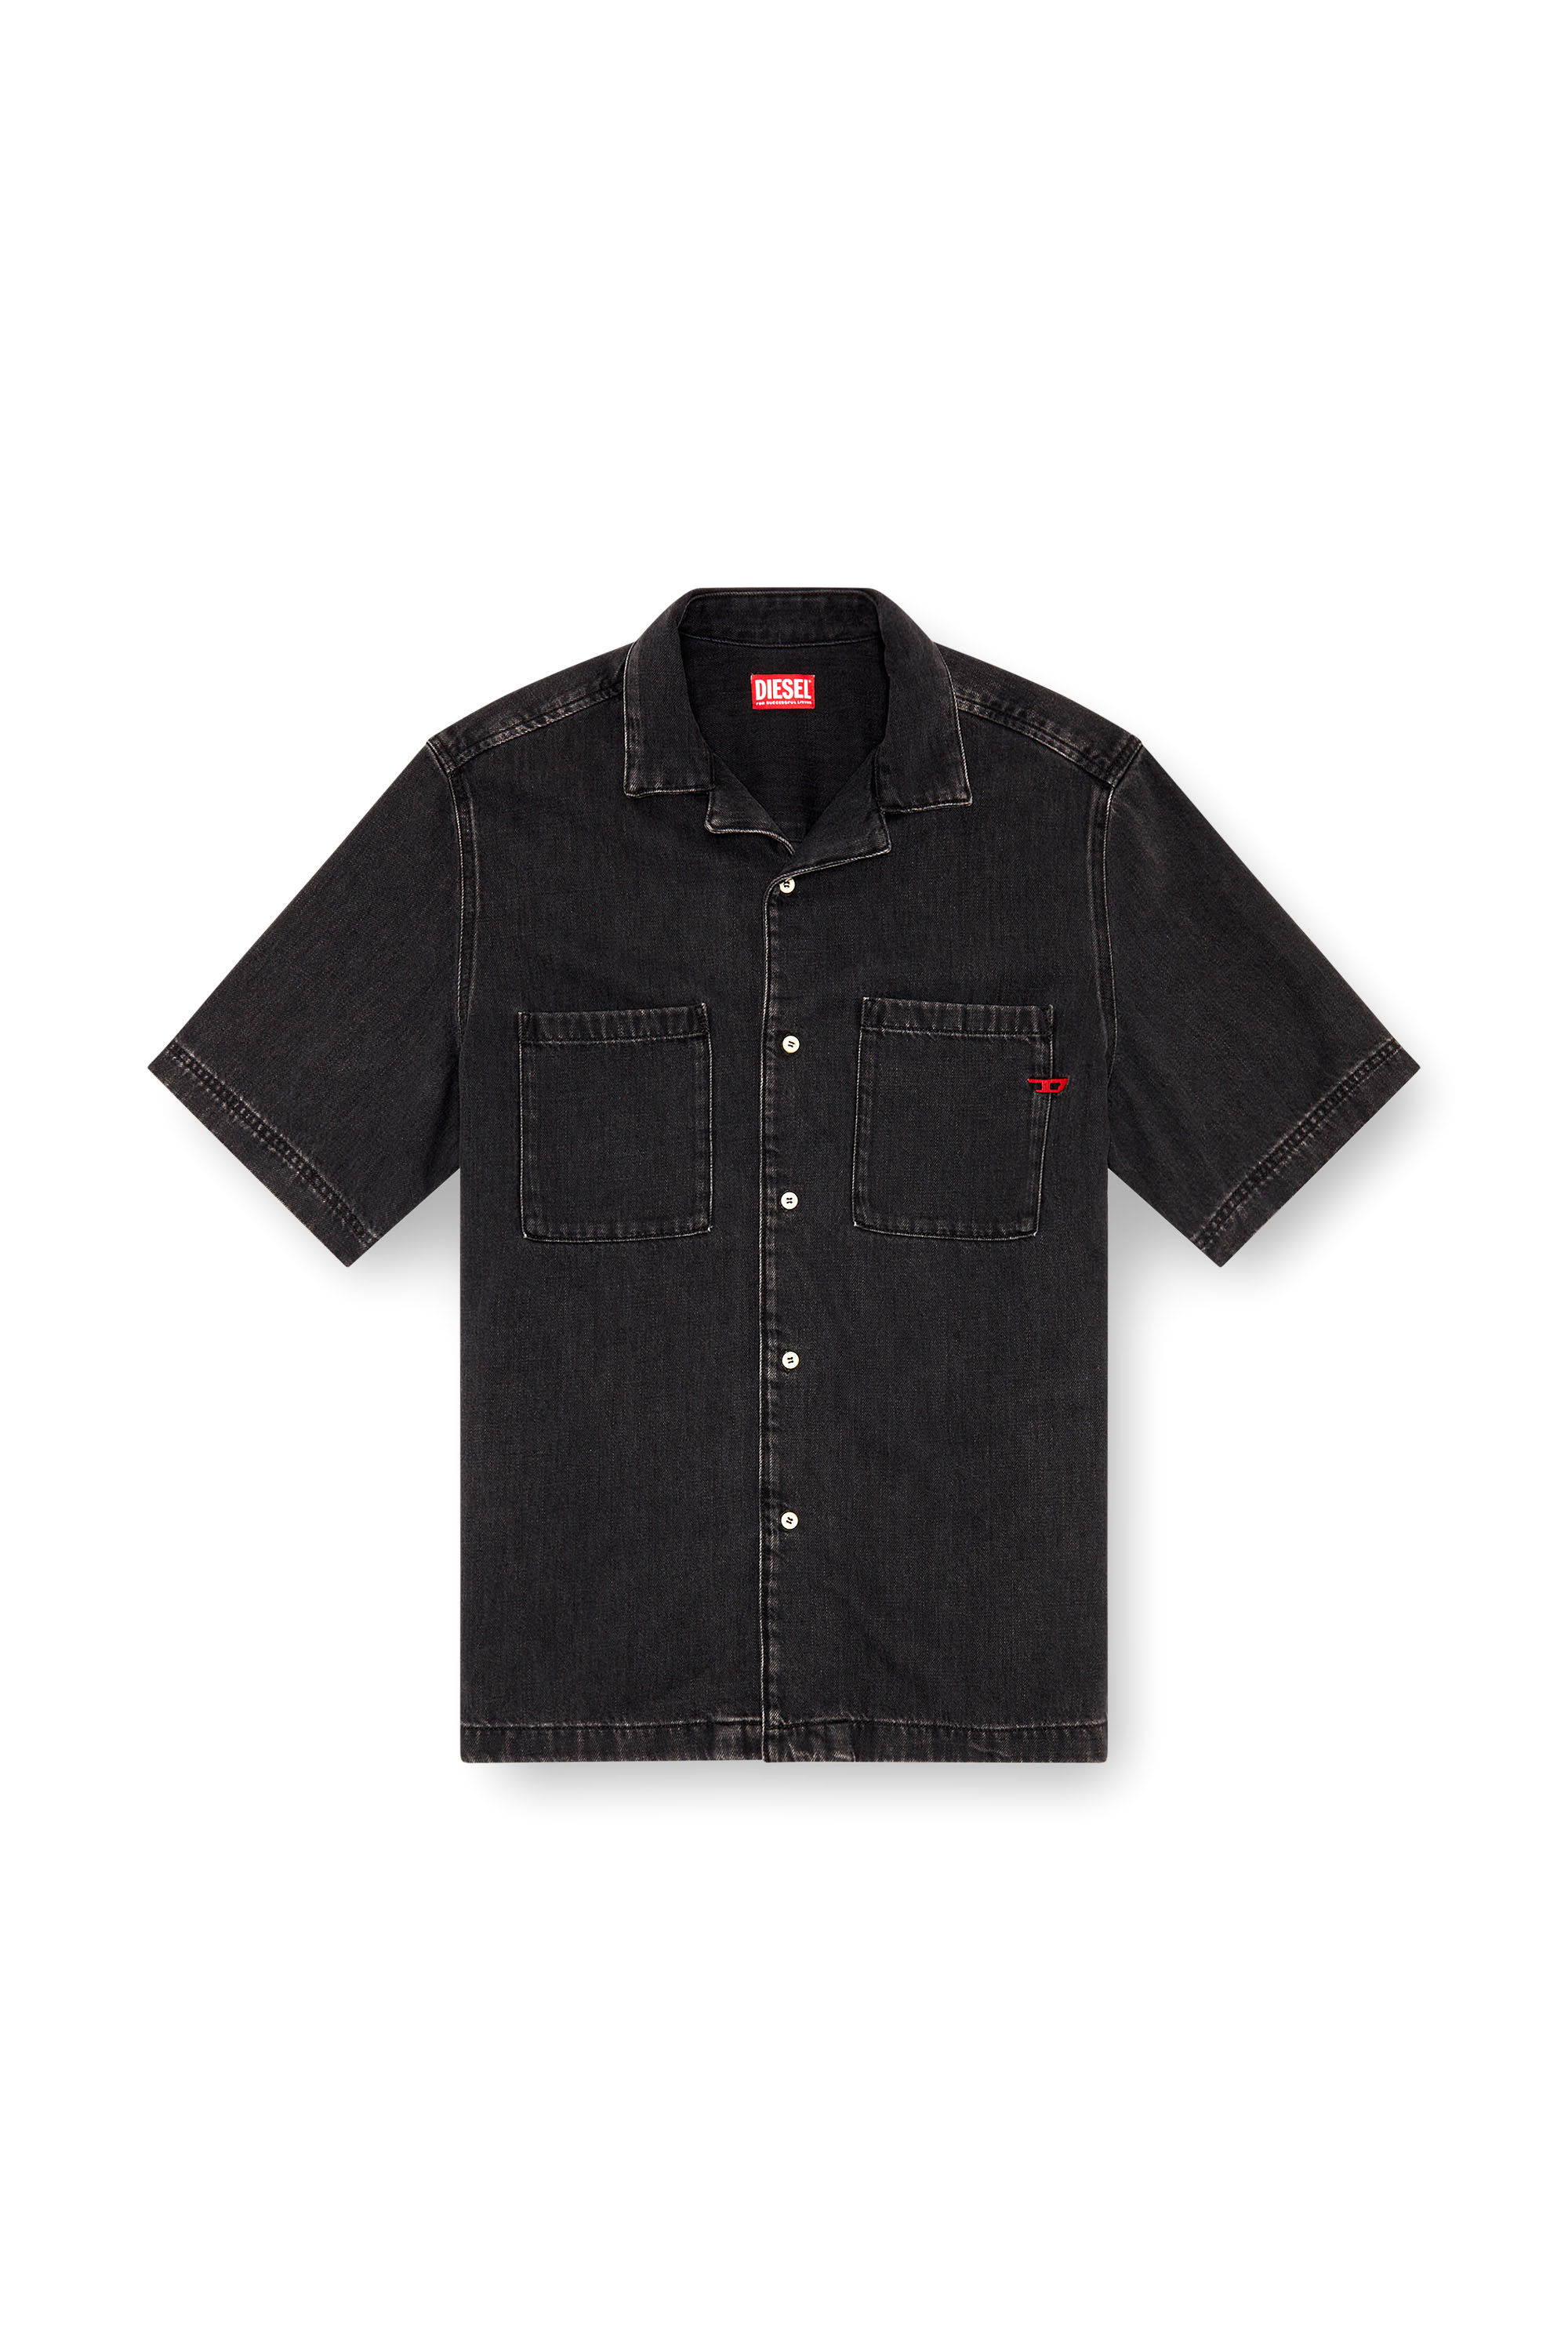 Diesel - D-PAROSHORT, Man Bowling shirt in Tencel denim in Black - Image 5